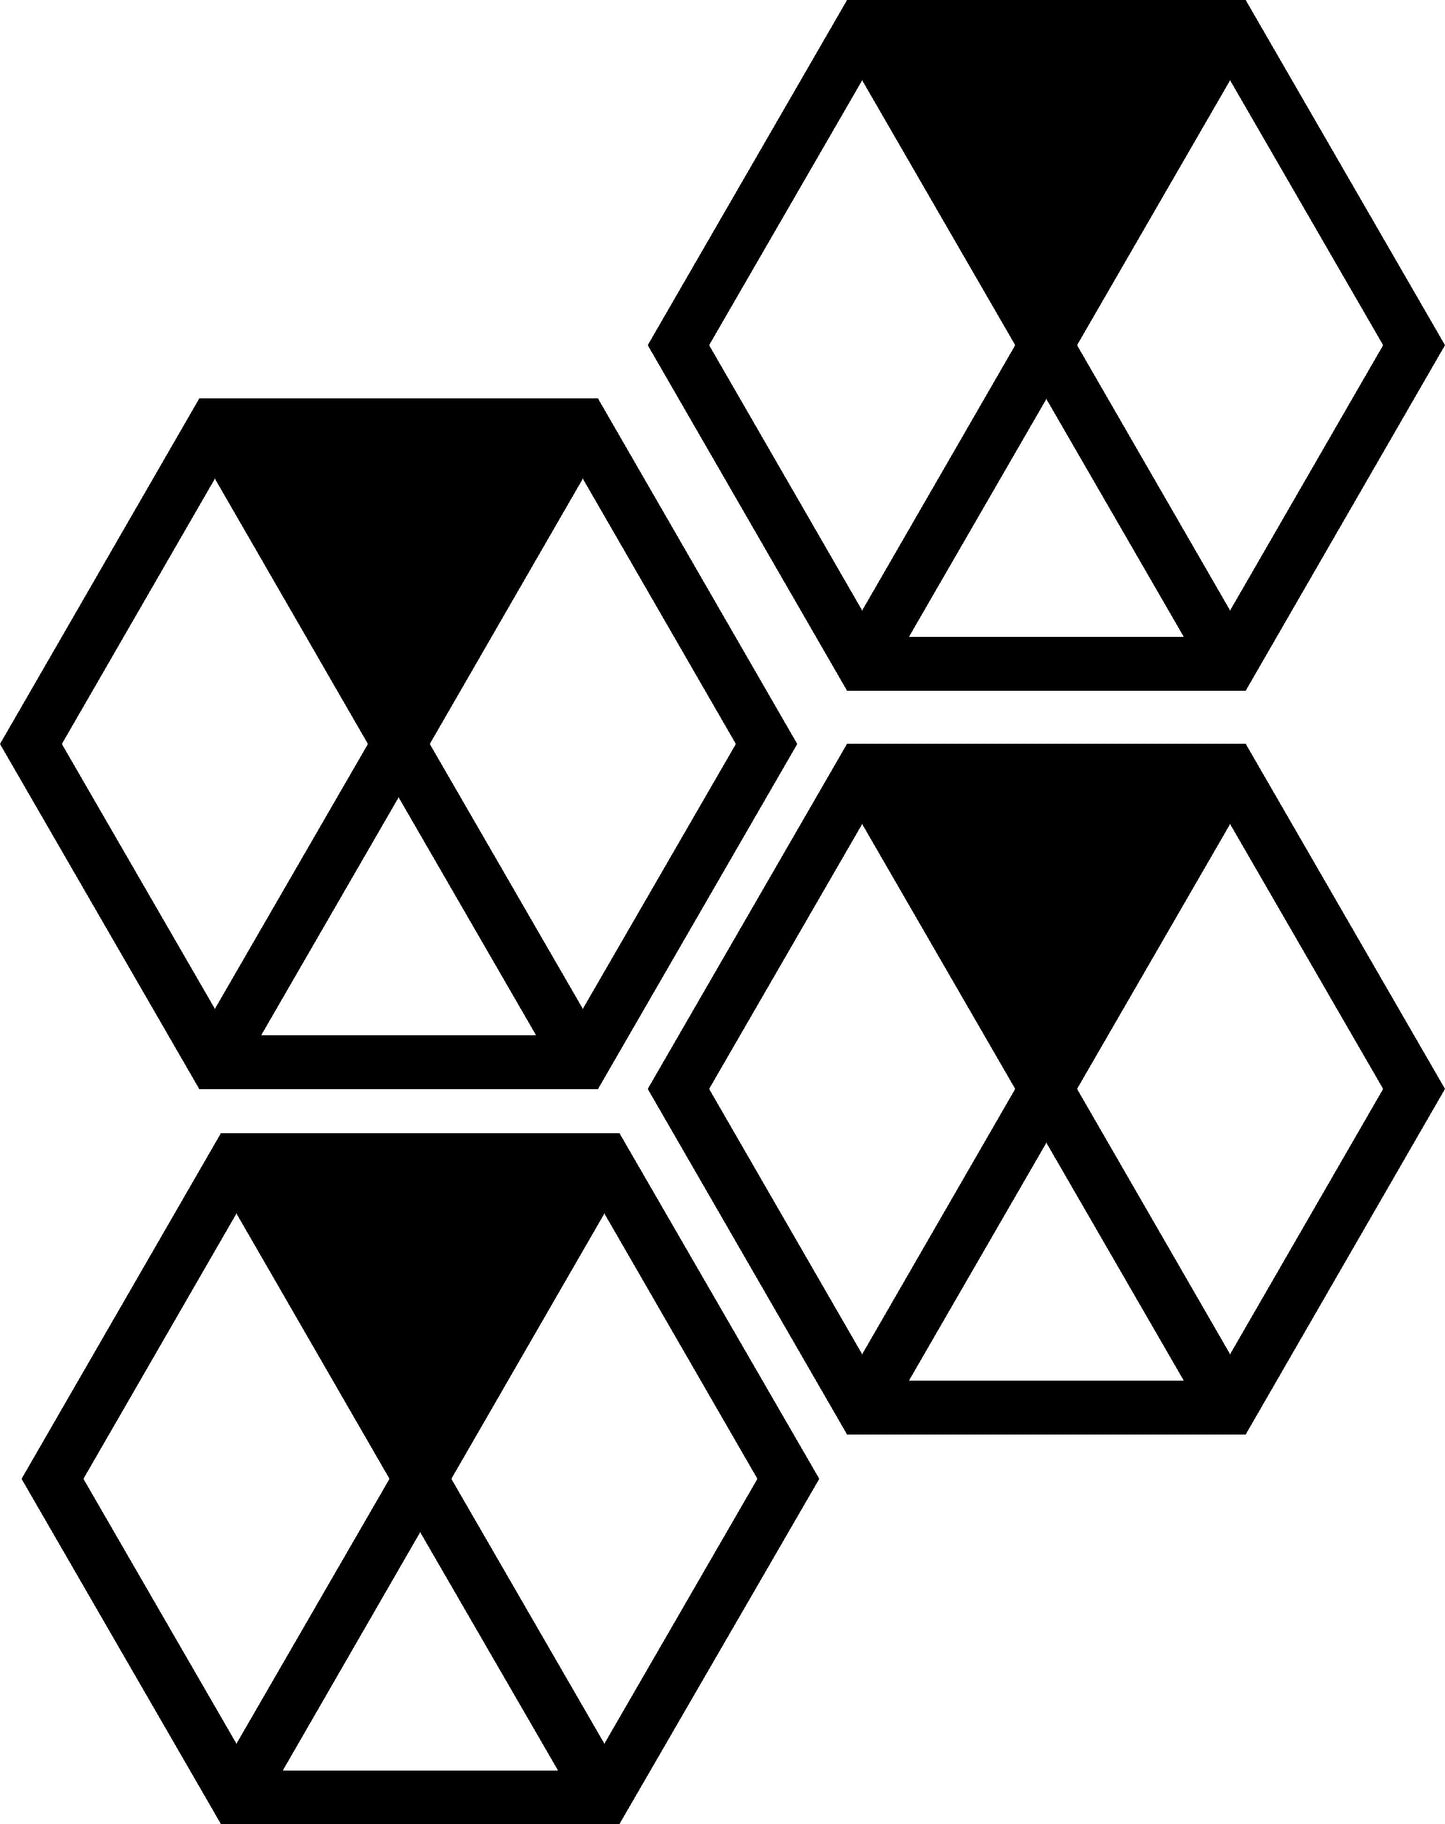 Hexagonal Design 3 (Large)